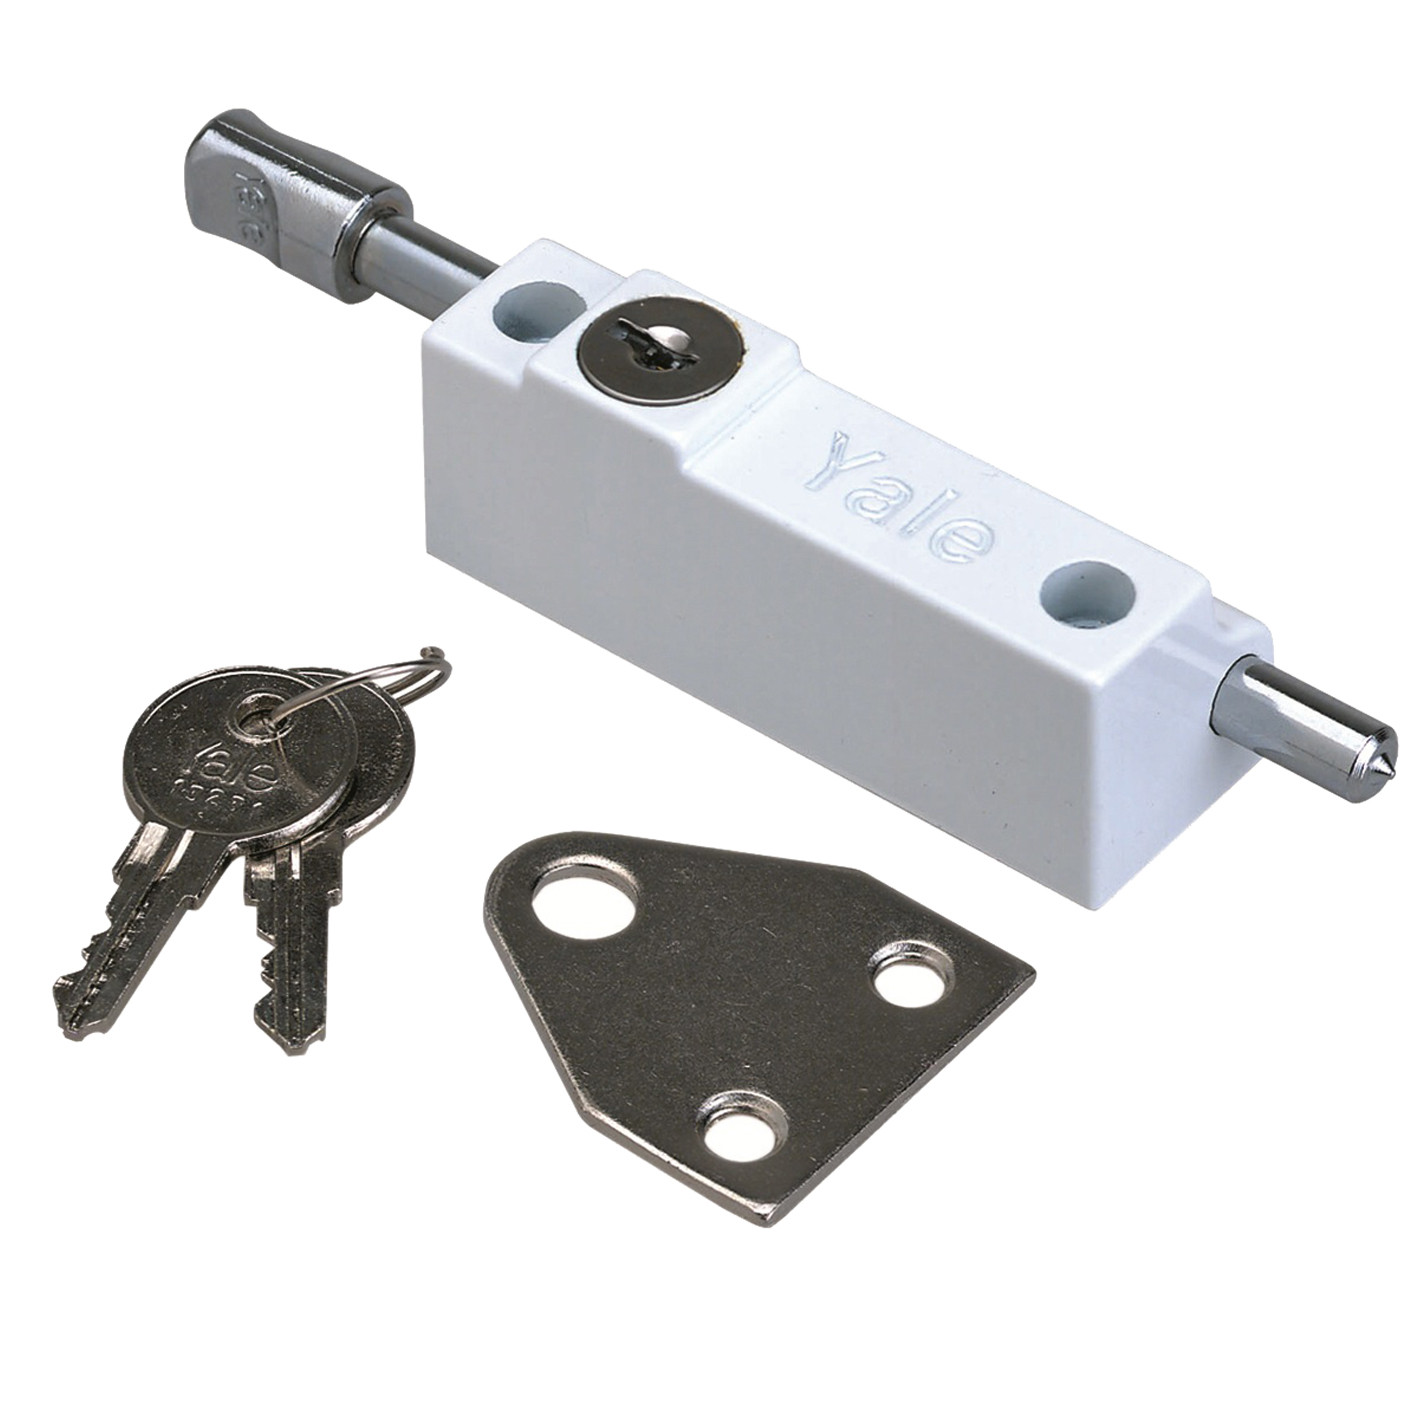 Best ideas about Patio Door Lock
. Save or Pin Yale P124 Patio Door Lock P 124 WE 1 lock & 2 keys Now.